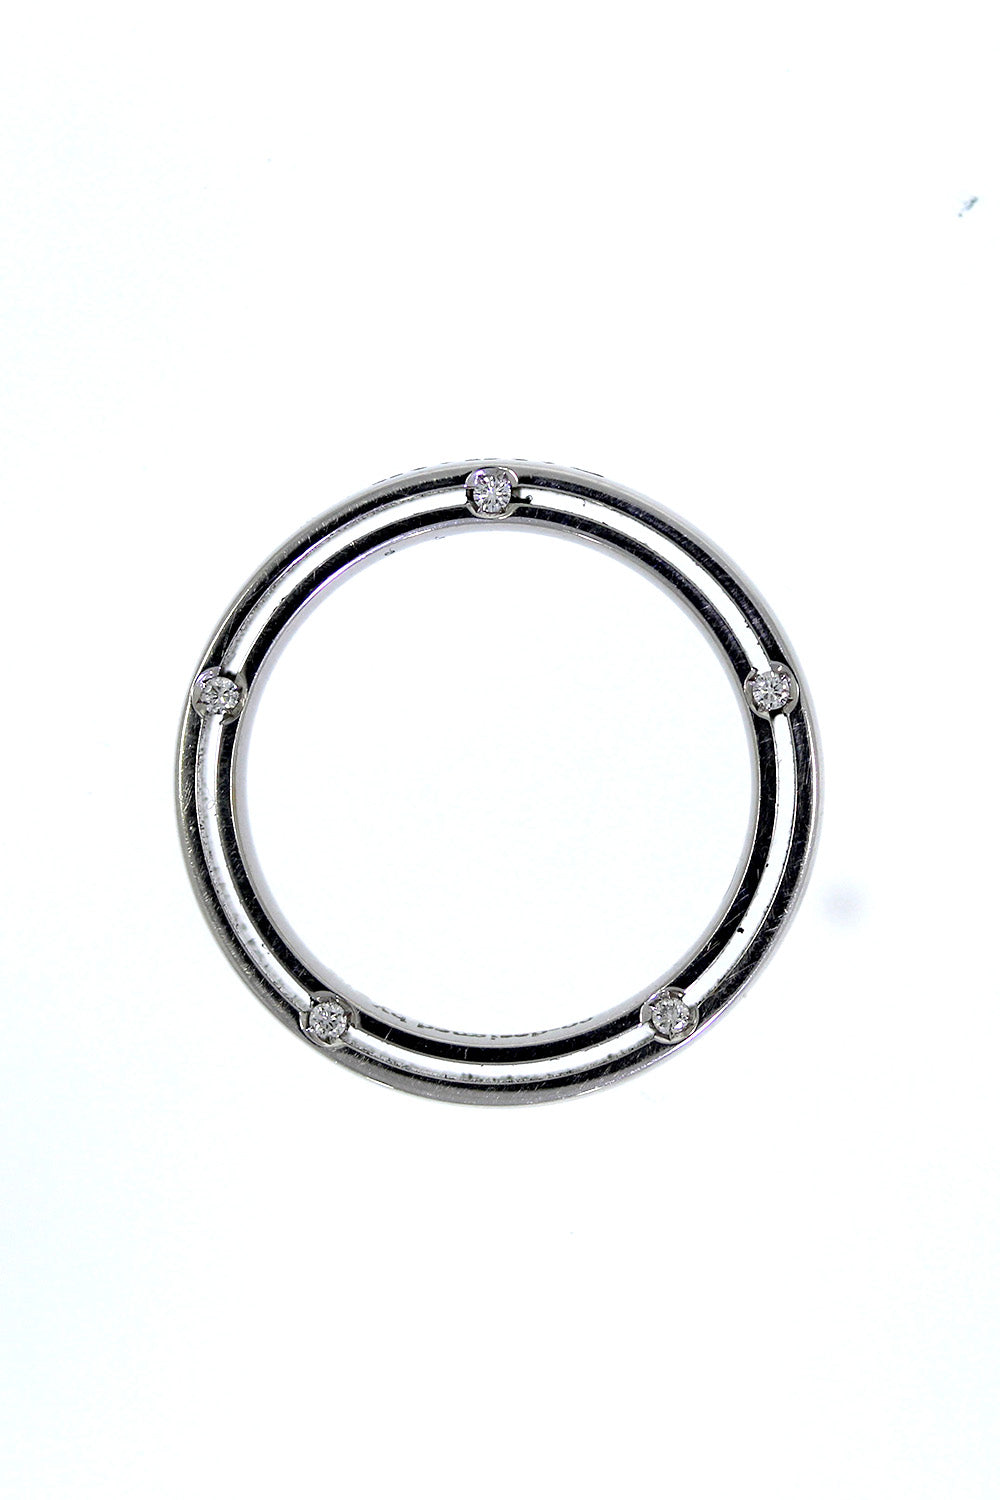 Weißgold Ring designed by Brad Pitt